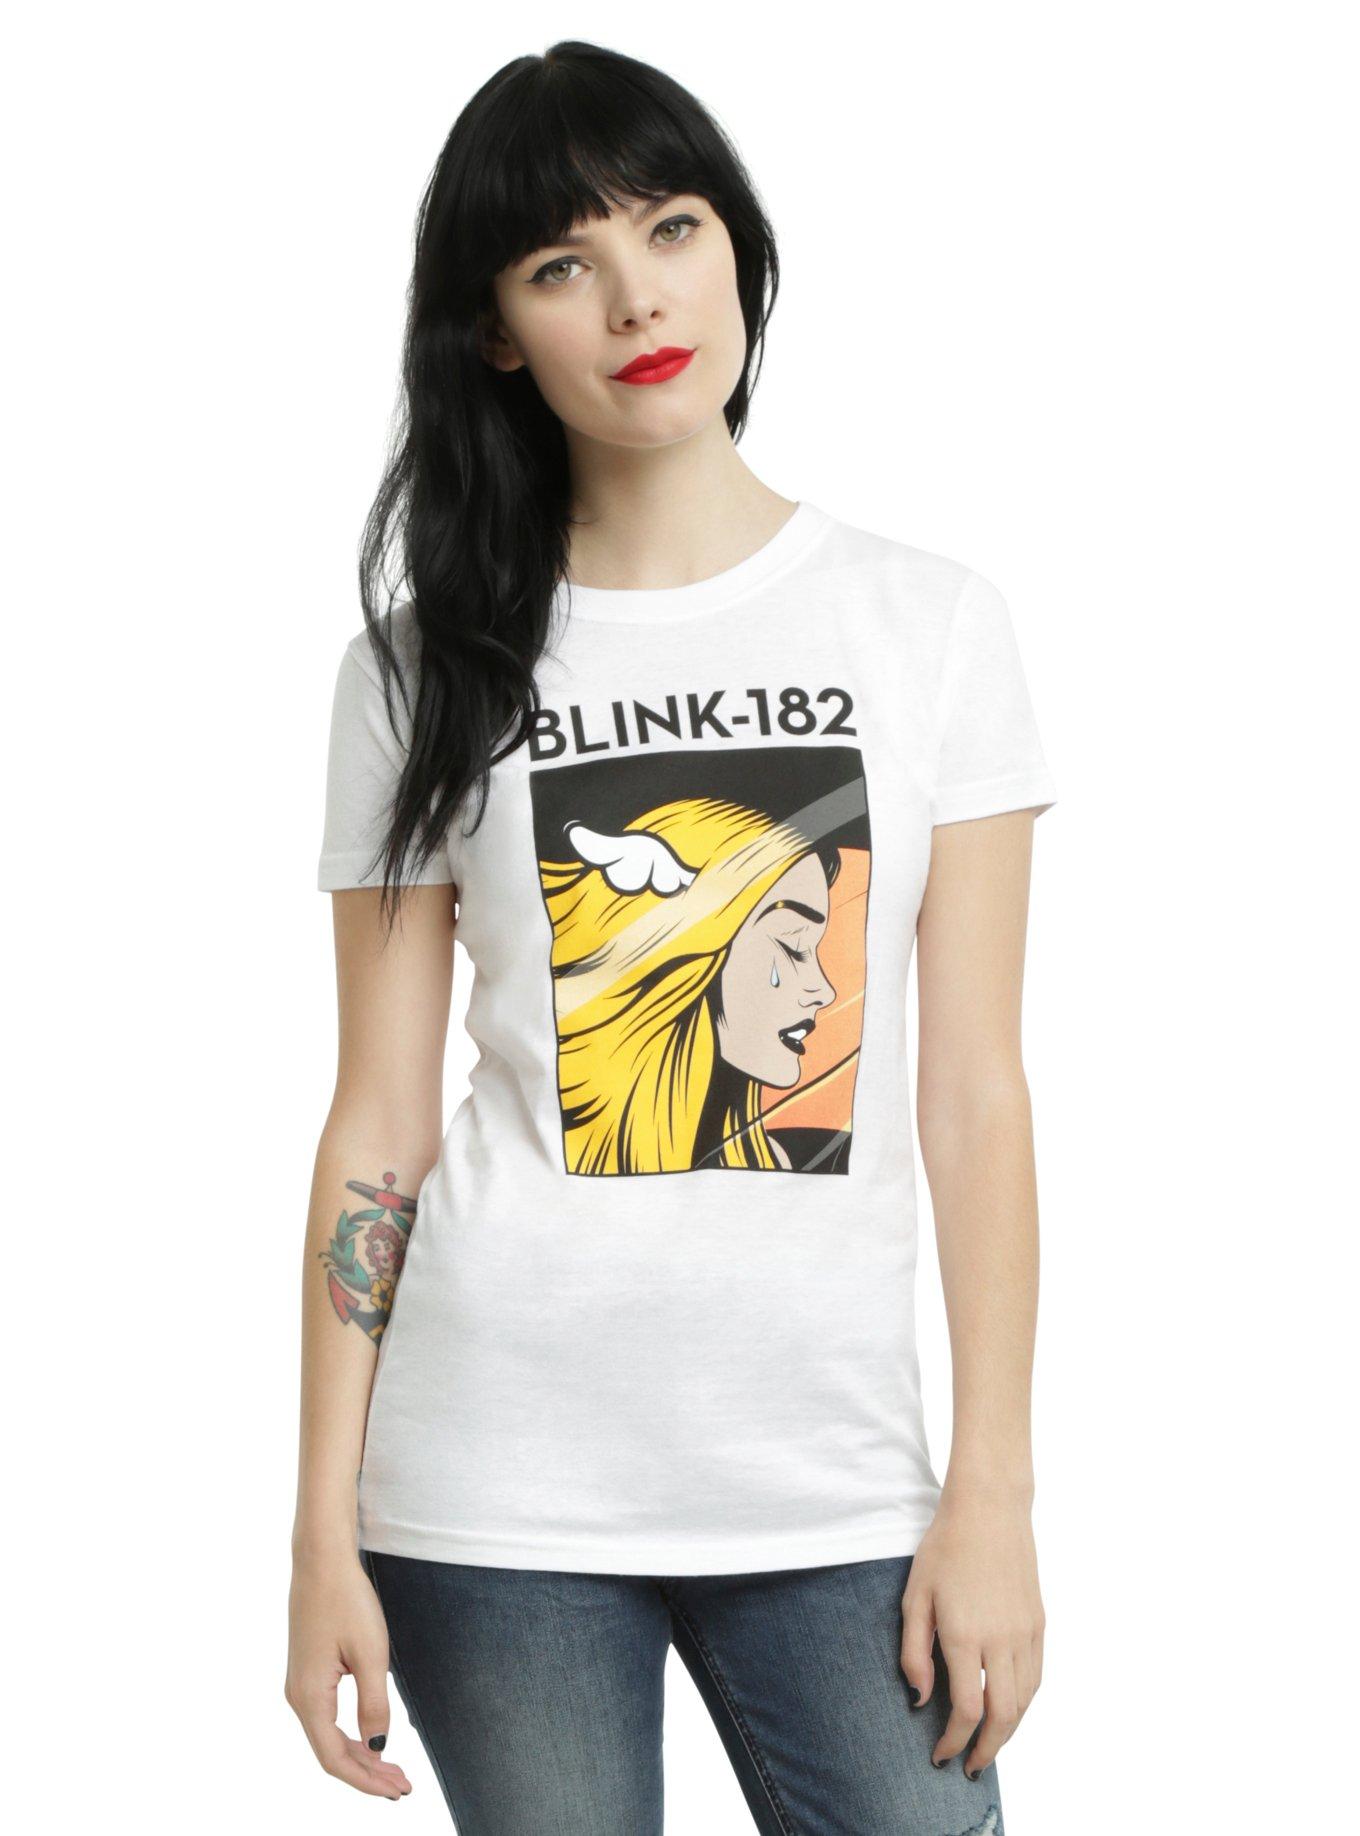 Blink-182 Cryifornia Girl Girls T-Shirt, WHITE, hi-res